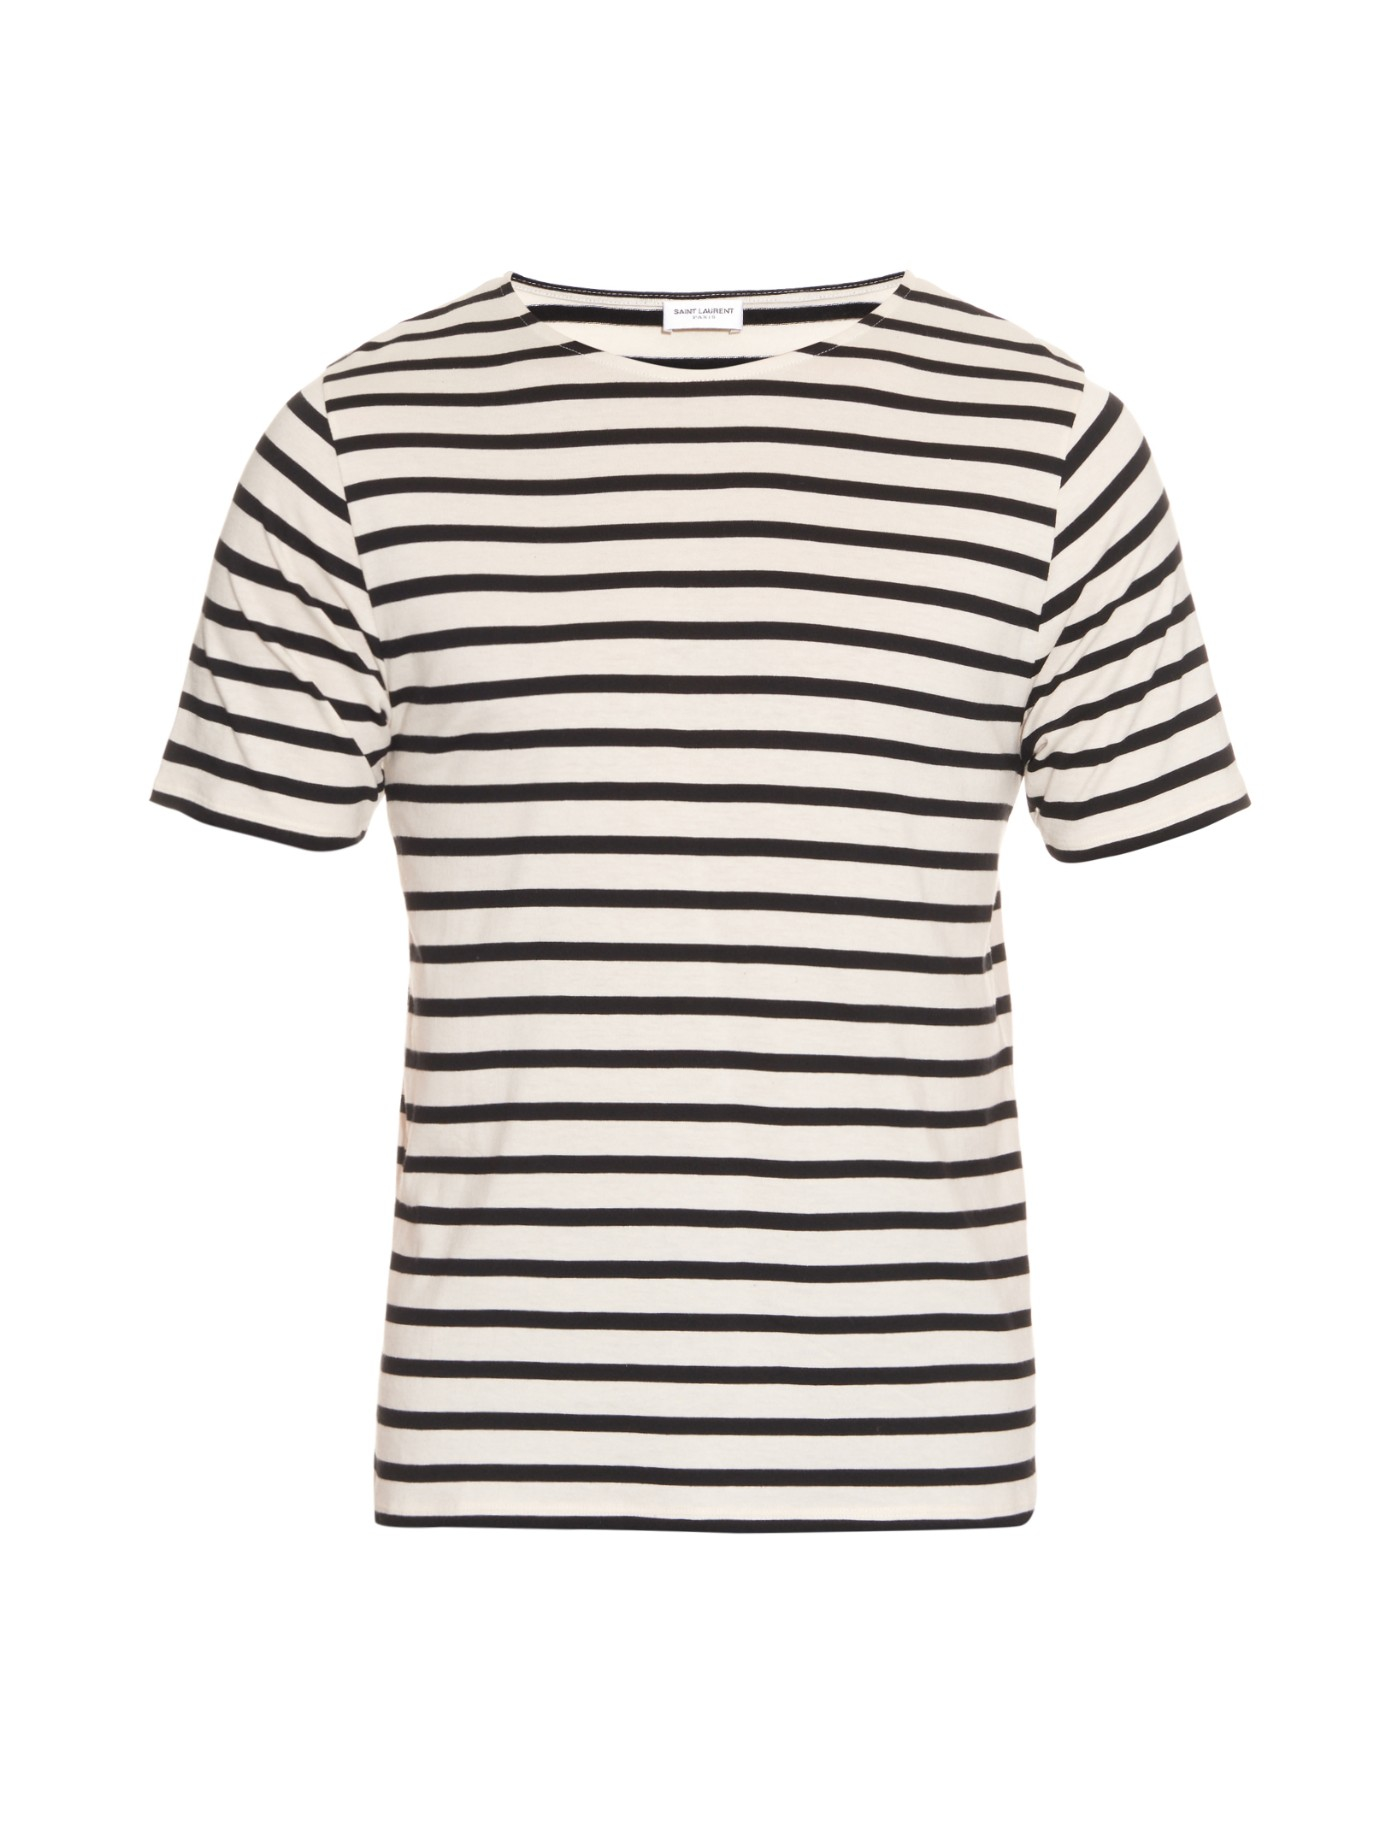 Saint Laurent Striped Cotton-Jersey T-Shirt in White Black (Black 